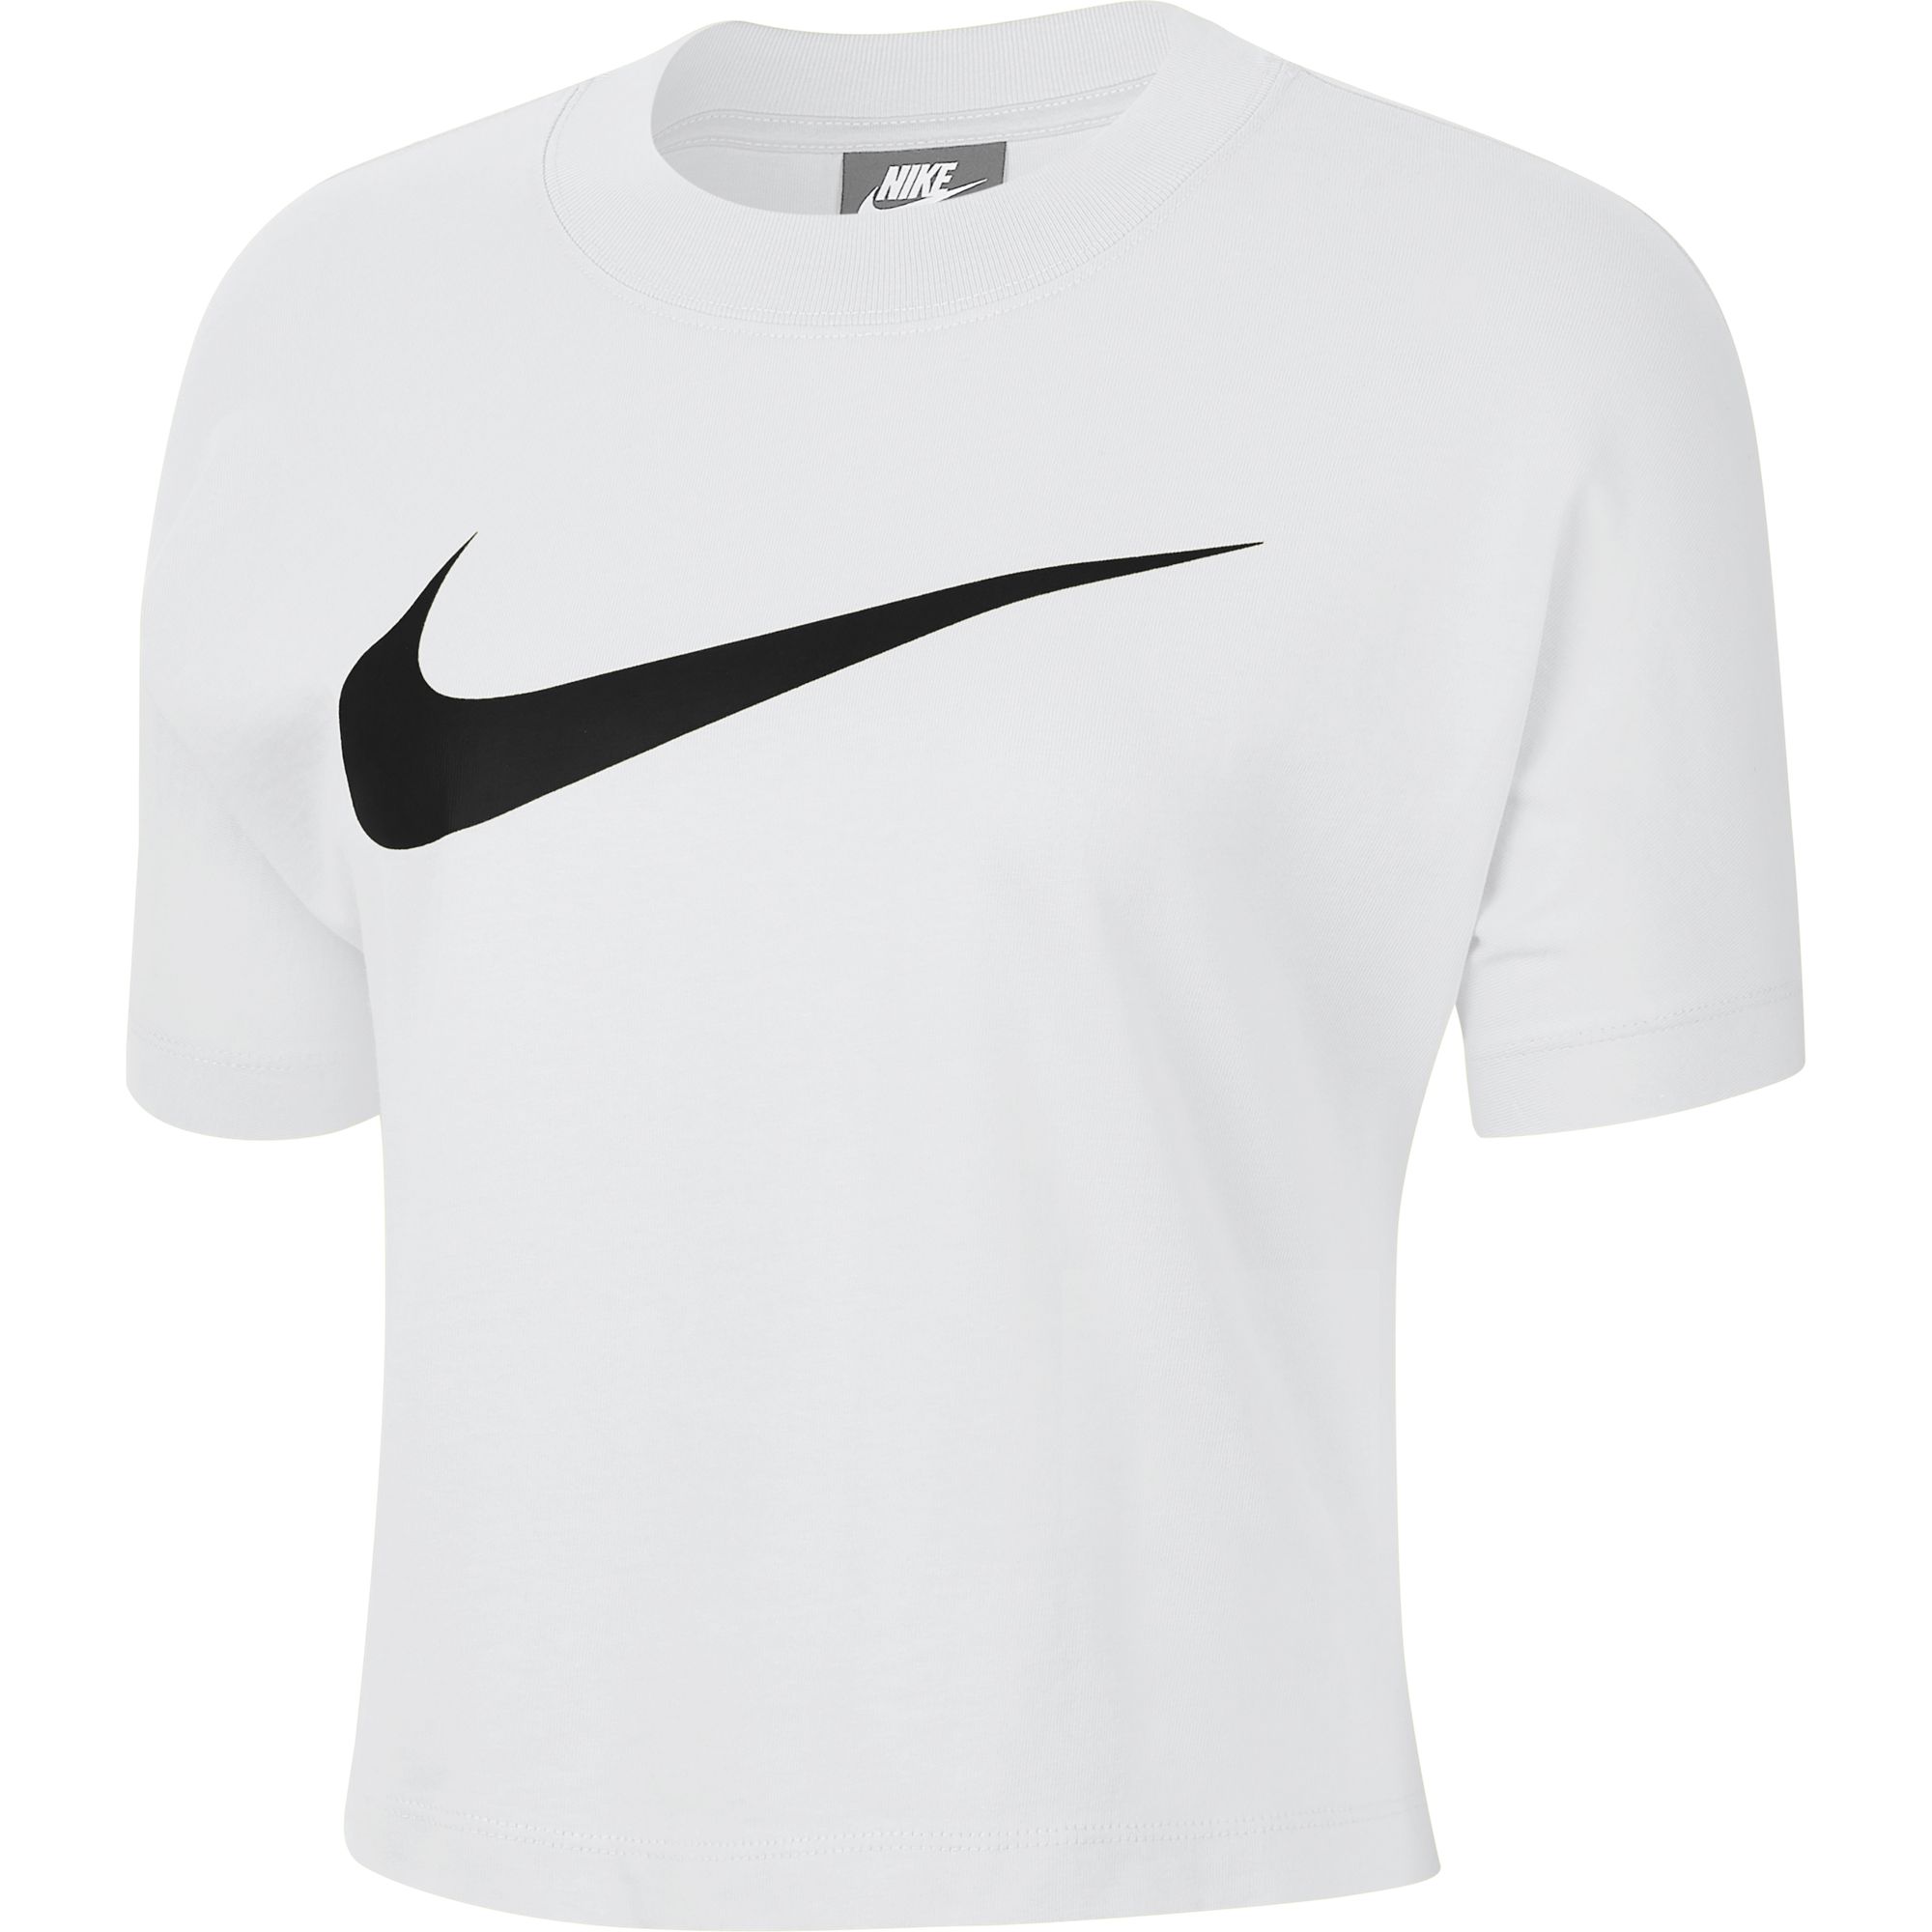 Swoosh перевод. Nike Sportswear Swoosh футболка. Футболка Nike Swoosh белая. Nike Sportswear Swoosh CJ. Nike NSW Swoosh t Shirt Black.